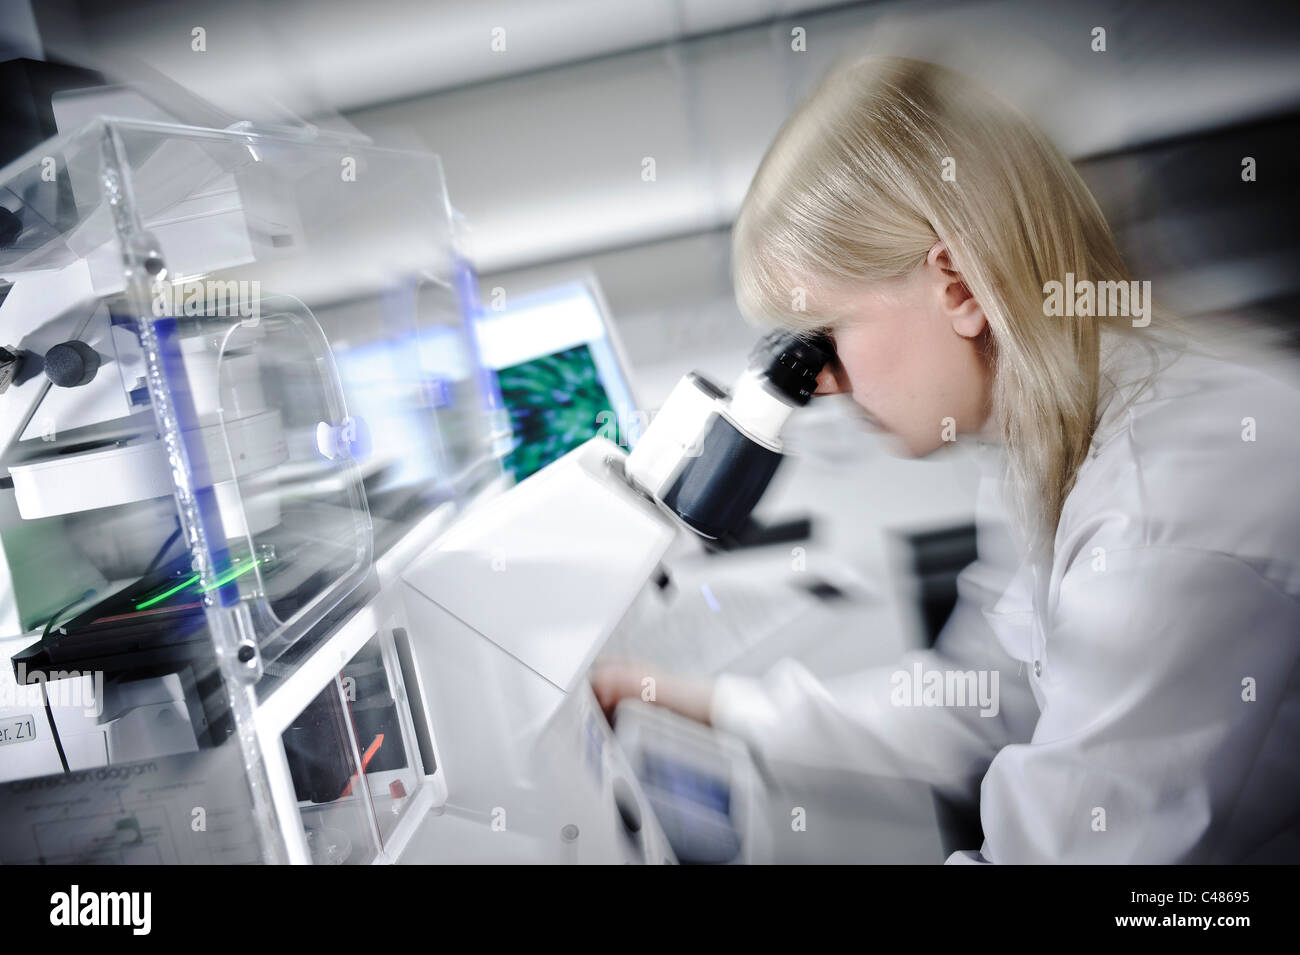 Junge blonde Wissenschaftlerin weißen Lab Coat starken Mikroskop in gut beleuchteten Wissenschaft Labor Zelle Bildern am Computer-Bildschirm Stockfoto